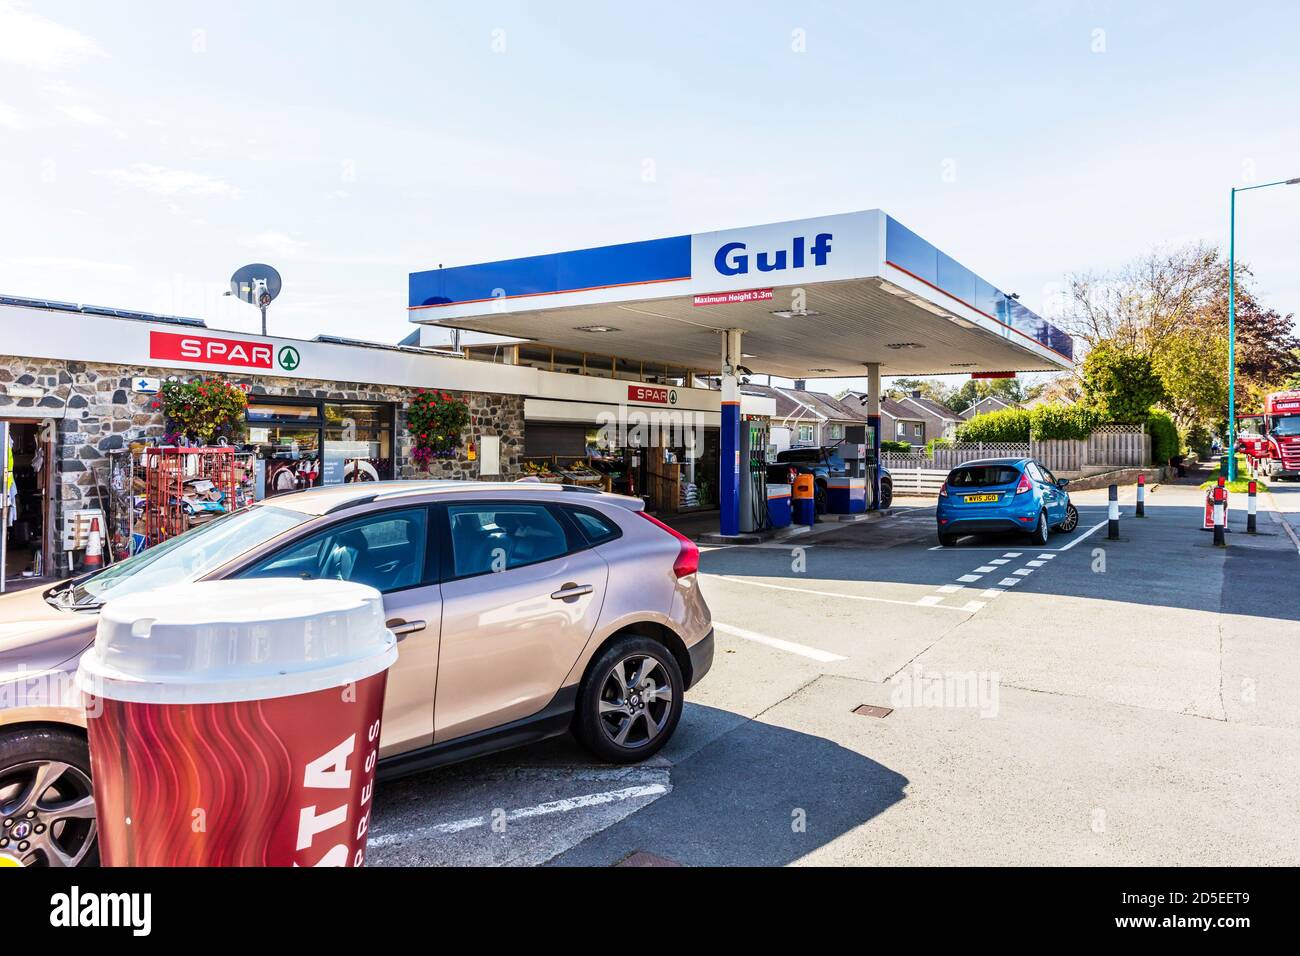 Gulf petrol station, Criccieth Town, Wales, UK, Gulf petrol, Gulf fuel, Spar shop, Gulf petrol pumps, Gulf garage, Spar at petrol station, petrol Stock Photo